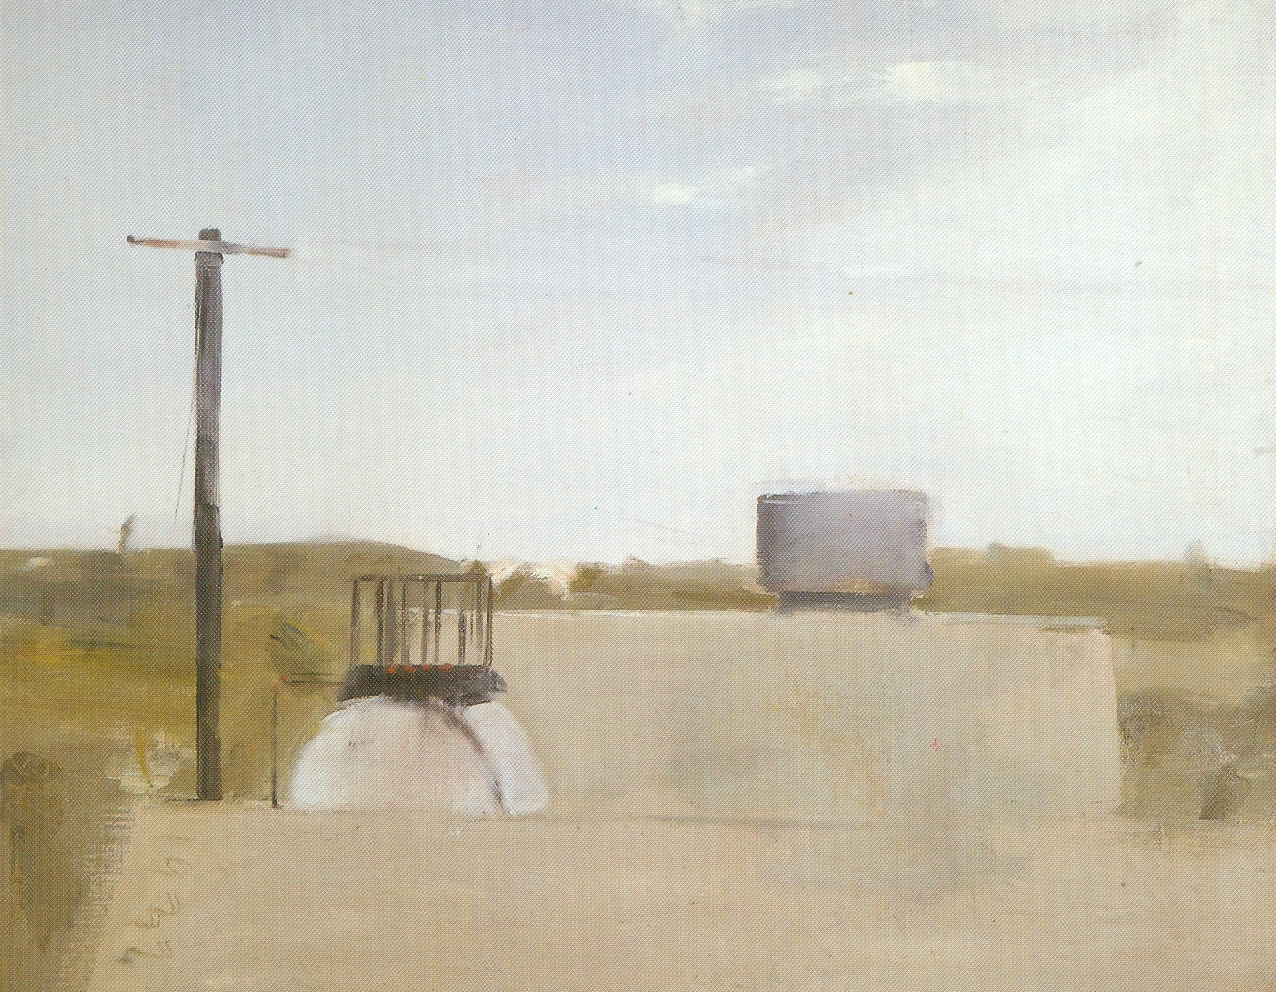 Edwin Dickinson's Painting "Gas Tank"